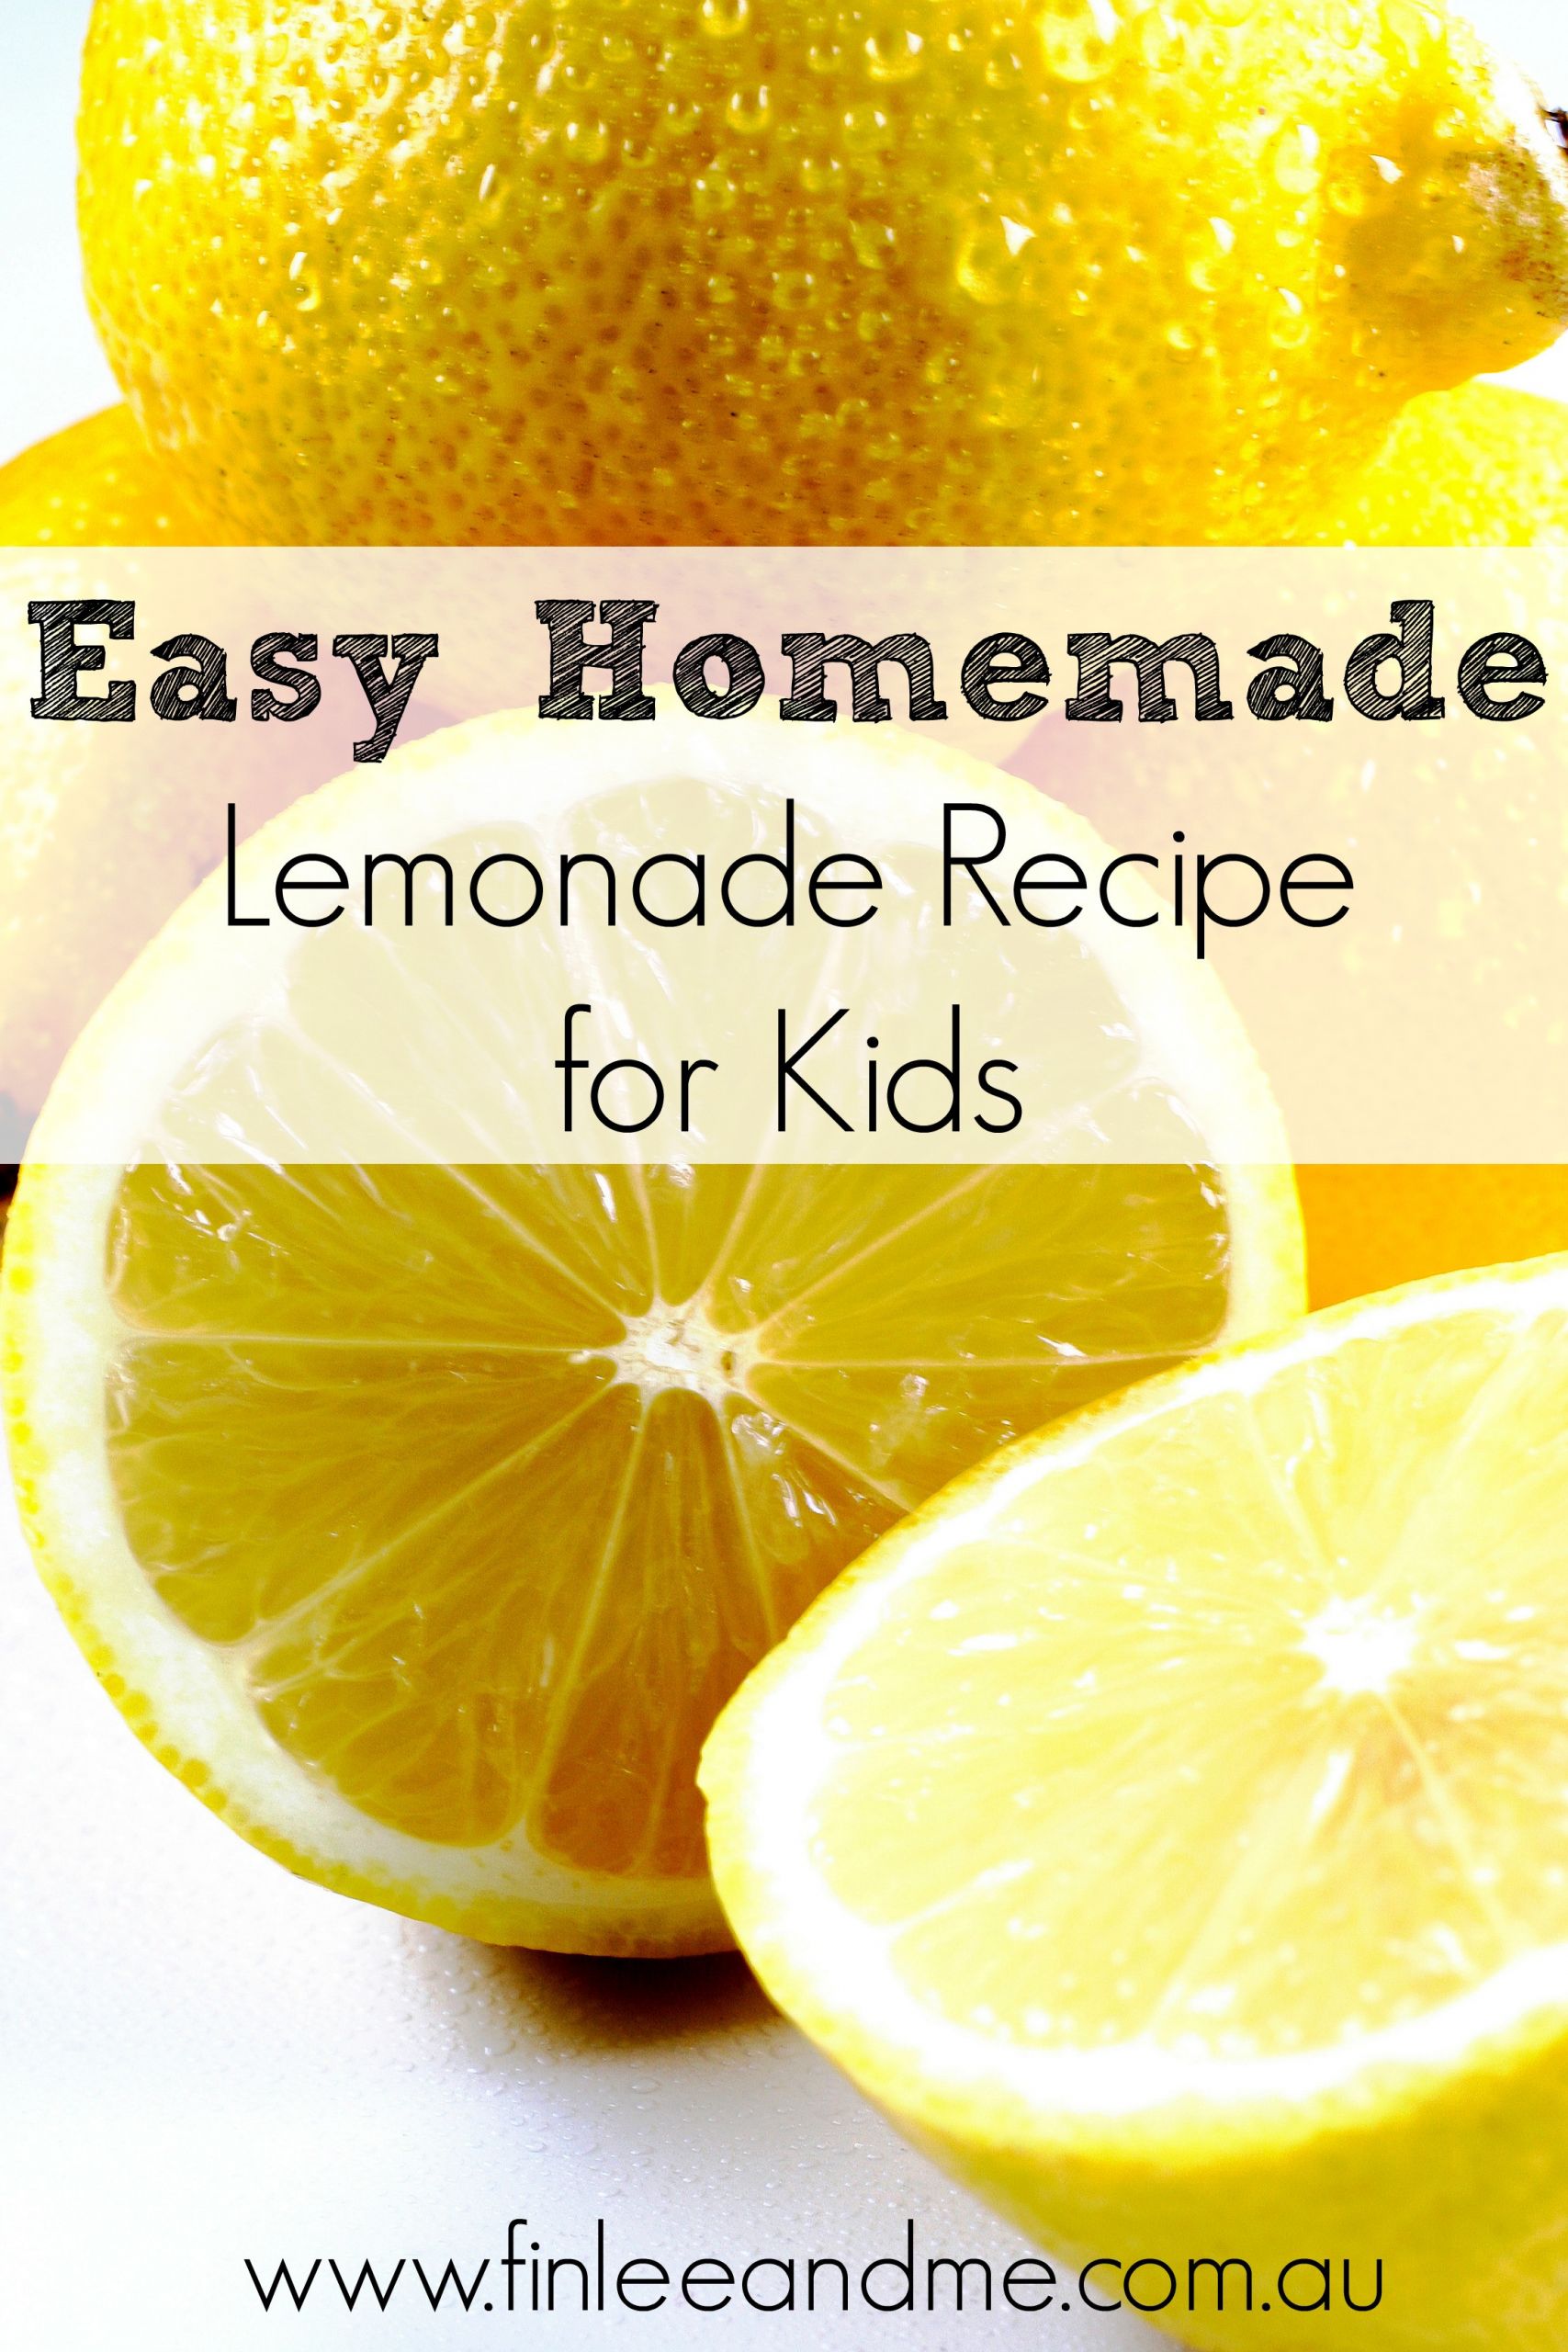 Lemonade Recipes For Kids
 Easy Lemonade Recipe for Kids Cooking with Kids